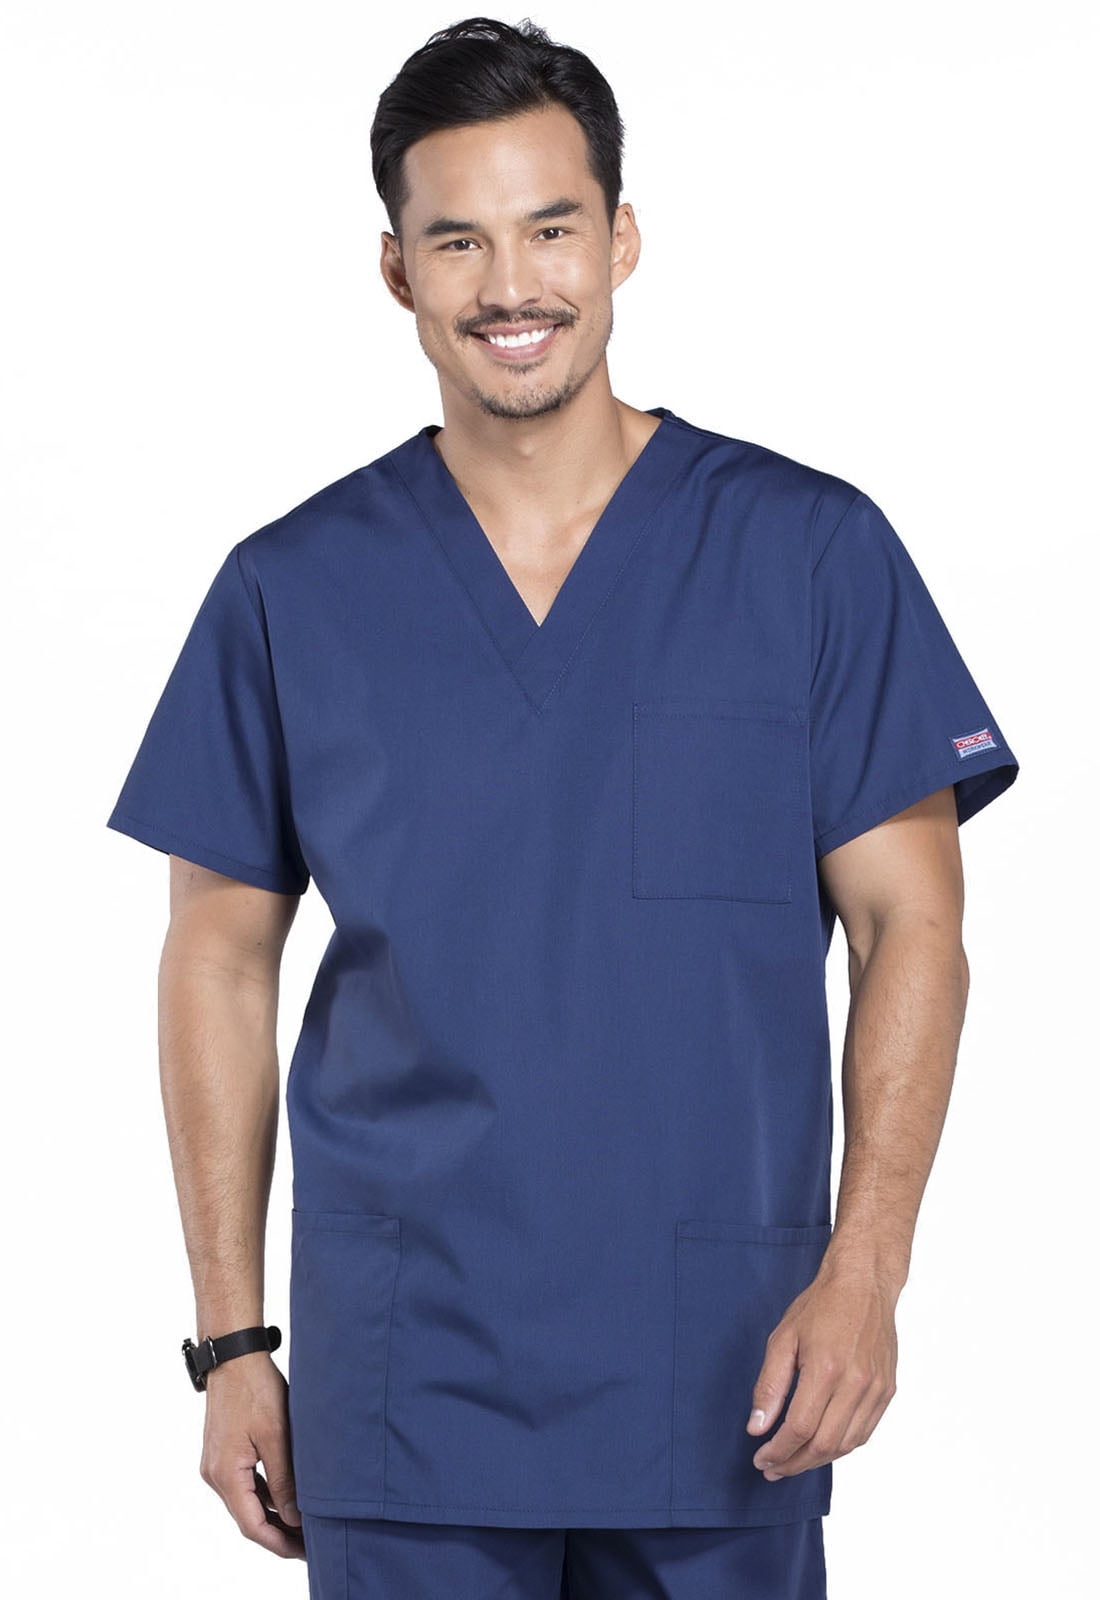 Unisex Men/Women V-Neck Scrub Top Petite Size Medical Hospital Nursing Uniform 